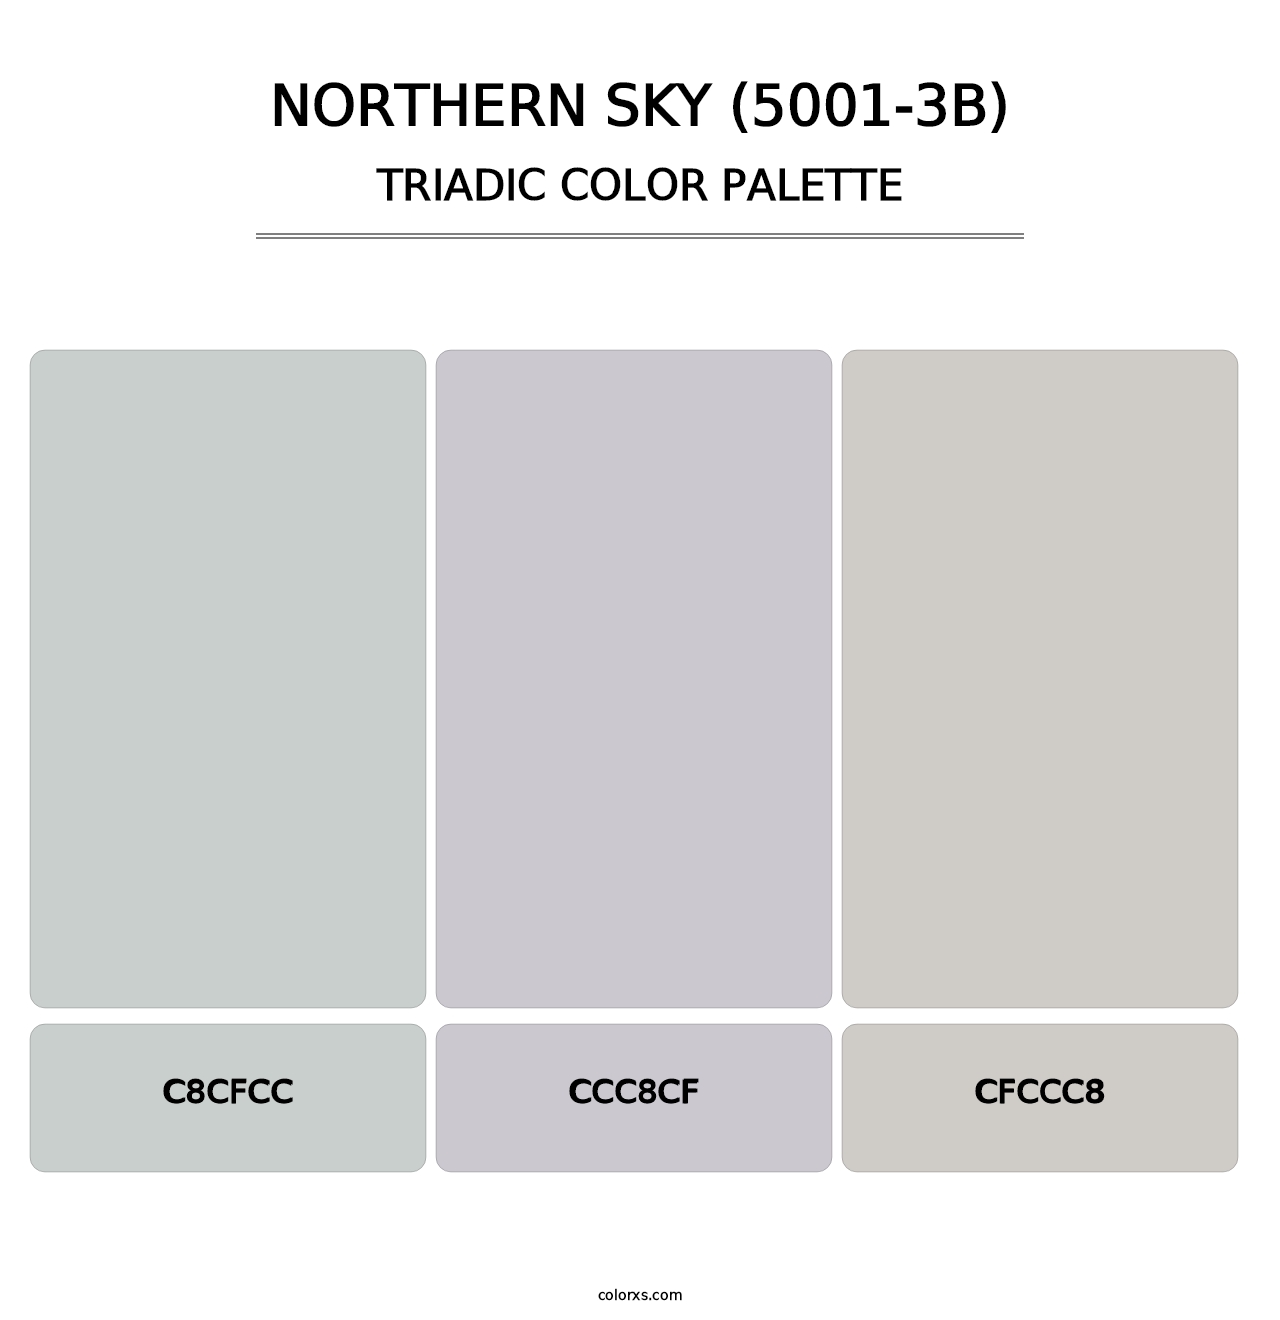 Northern Sky (5001-3B) - Triadic Color Palette